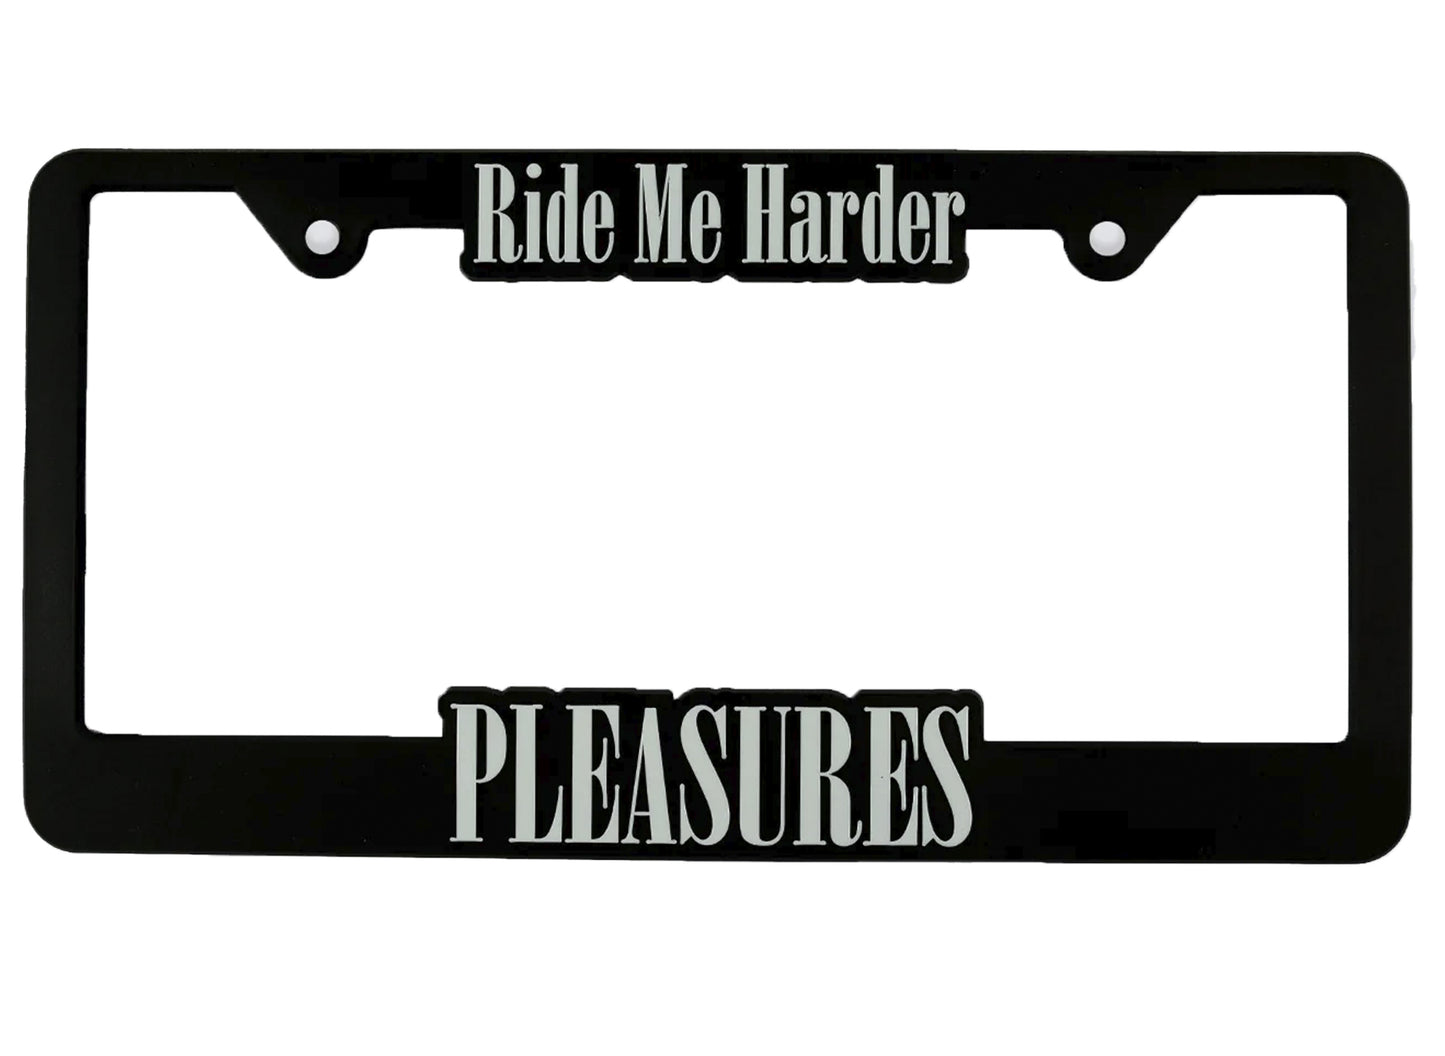 Pleasures Ride Me License Plate xld